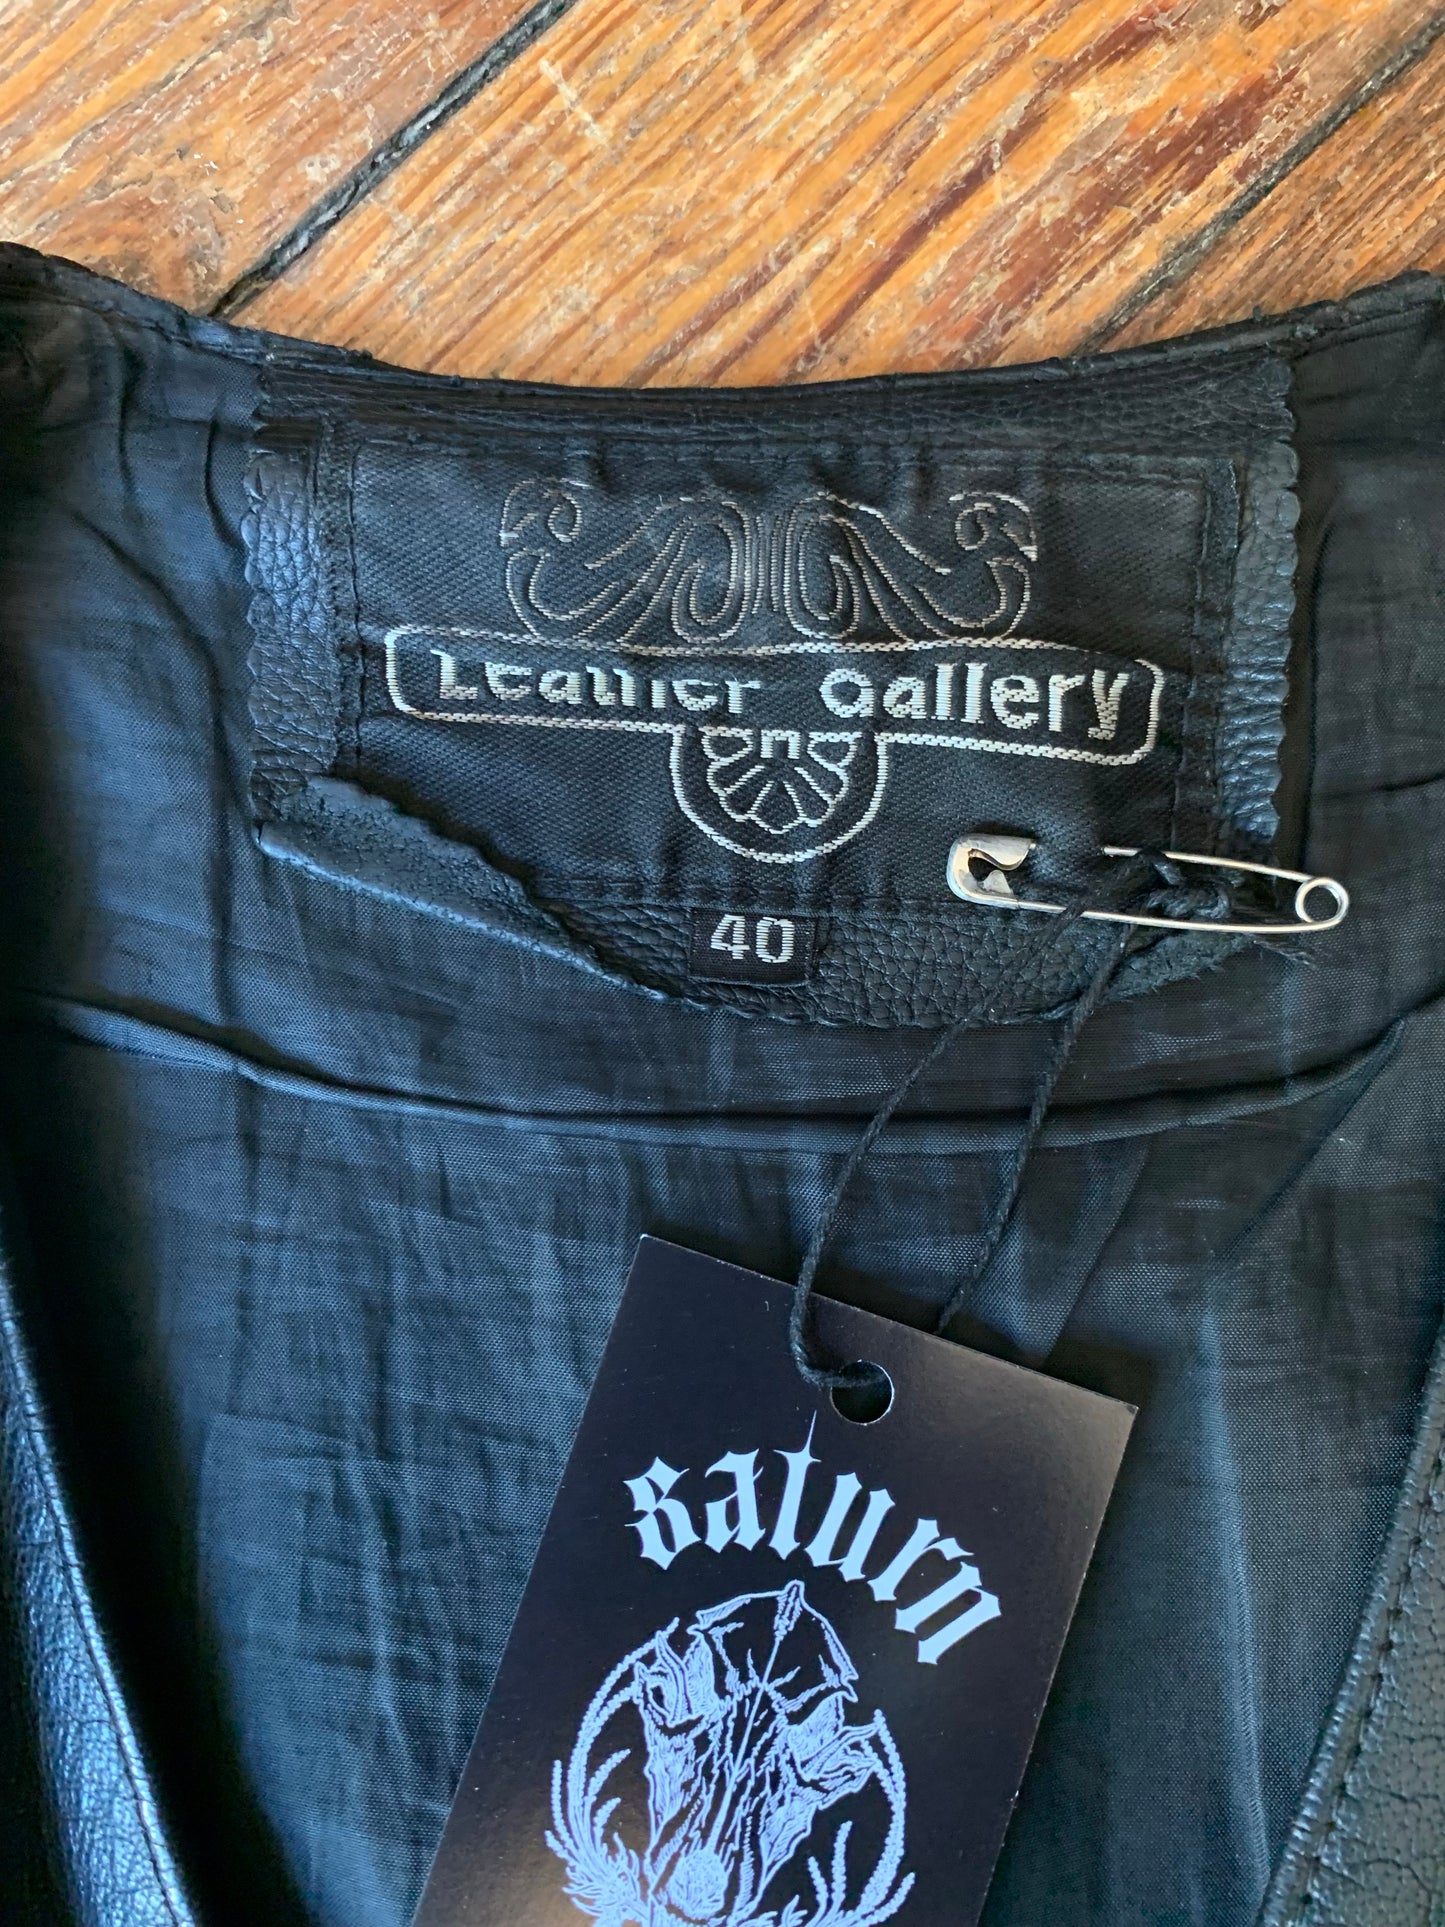 Vintage Leather Gallery Worn In Black Biker Vest